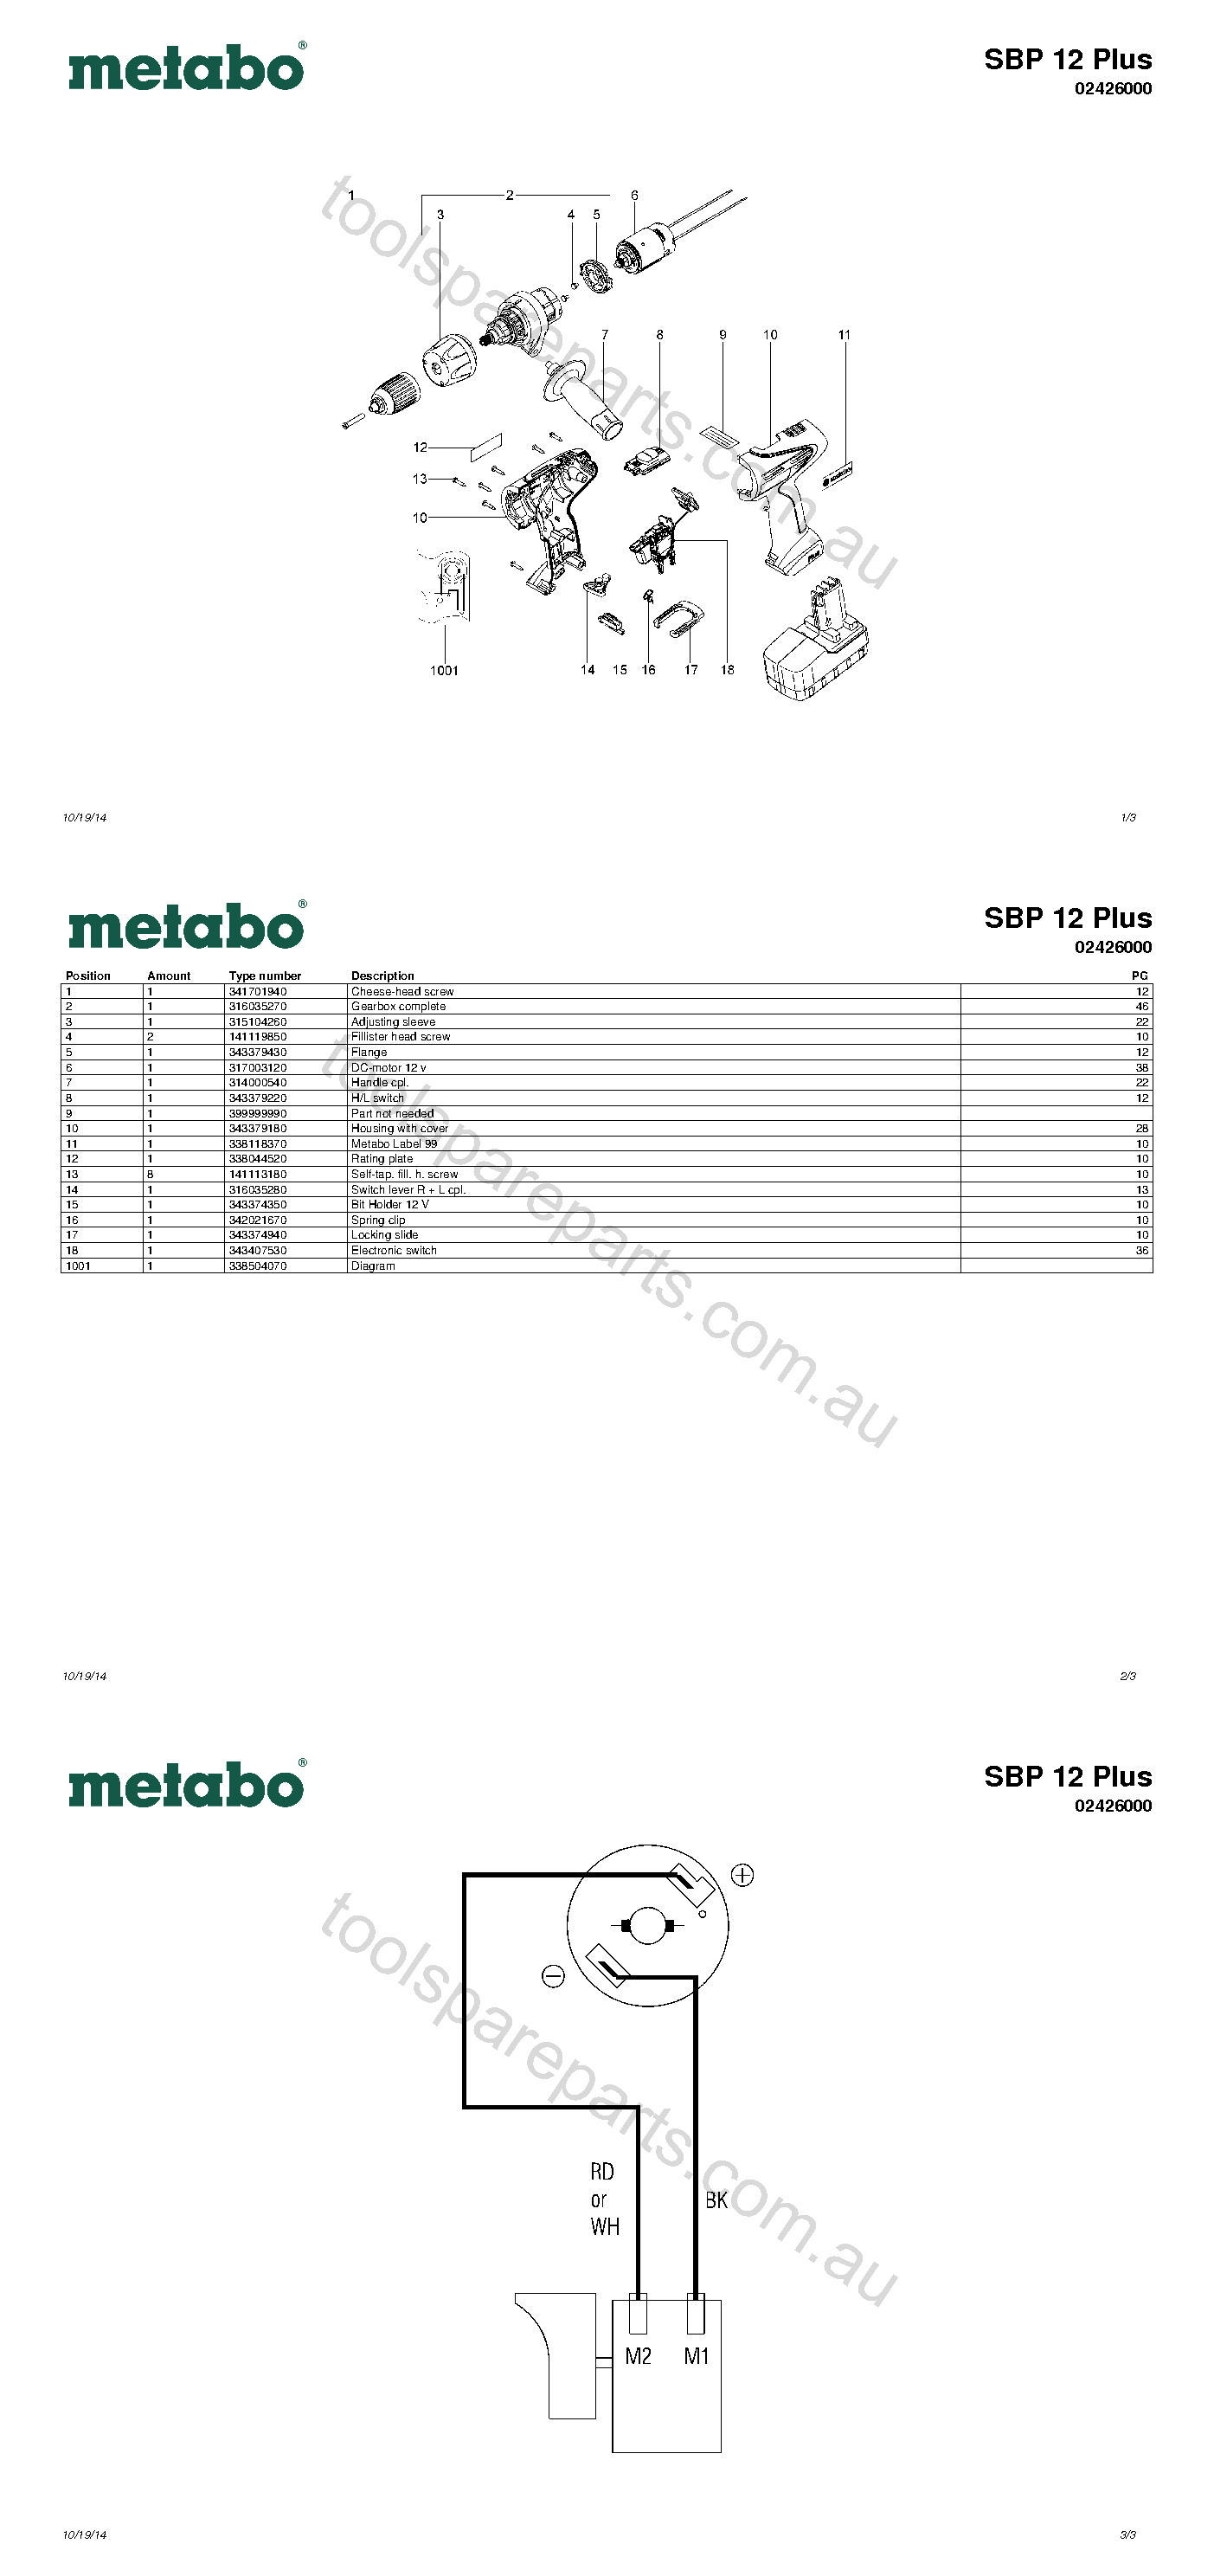 Metabo SBP 12 Plus 02426000  Diagram 1